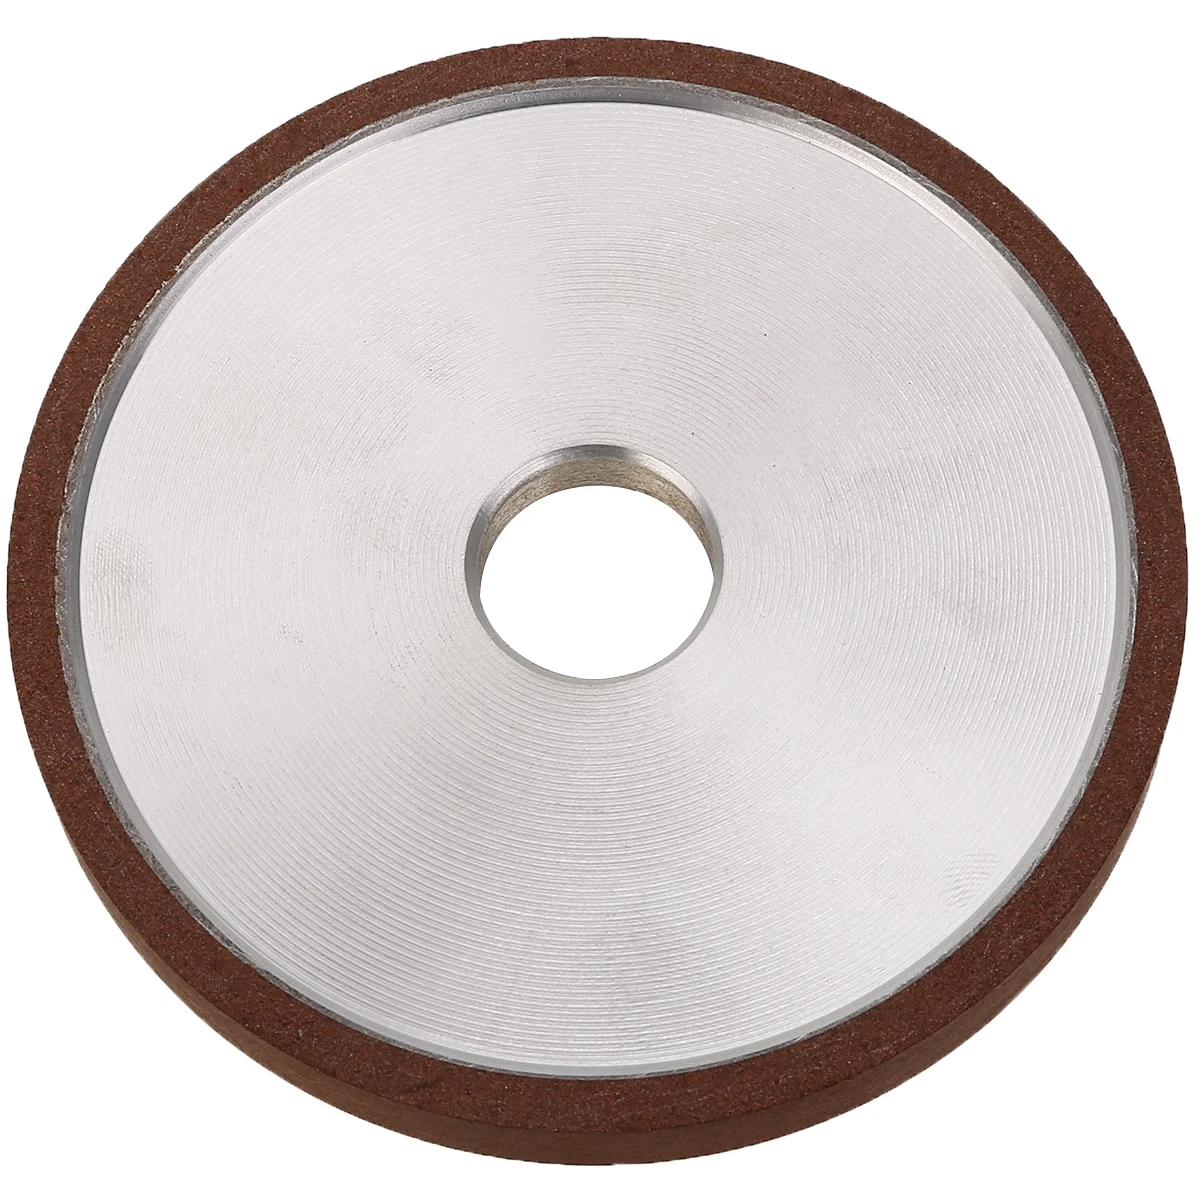 New Grinding Wheel Diamond Grinding Wheel 100mm Diamond Grinding Wheel Cup 180 Grit Cutter Grinder For Carbide Metal